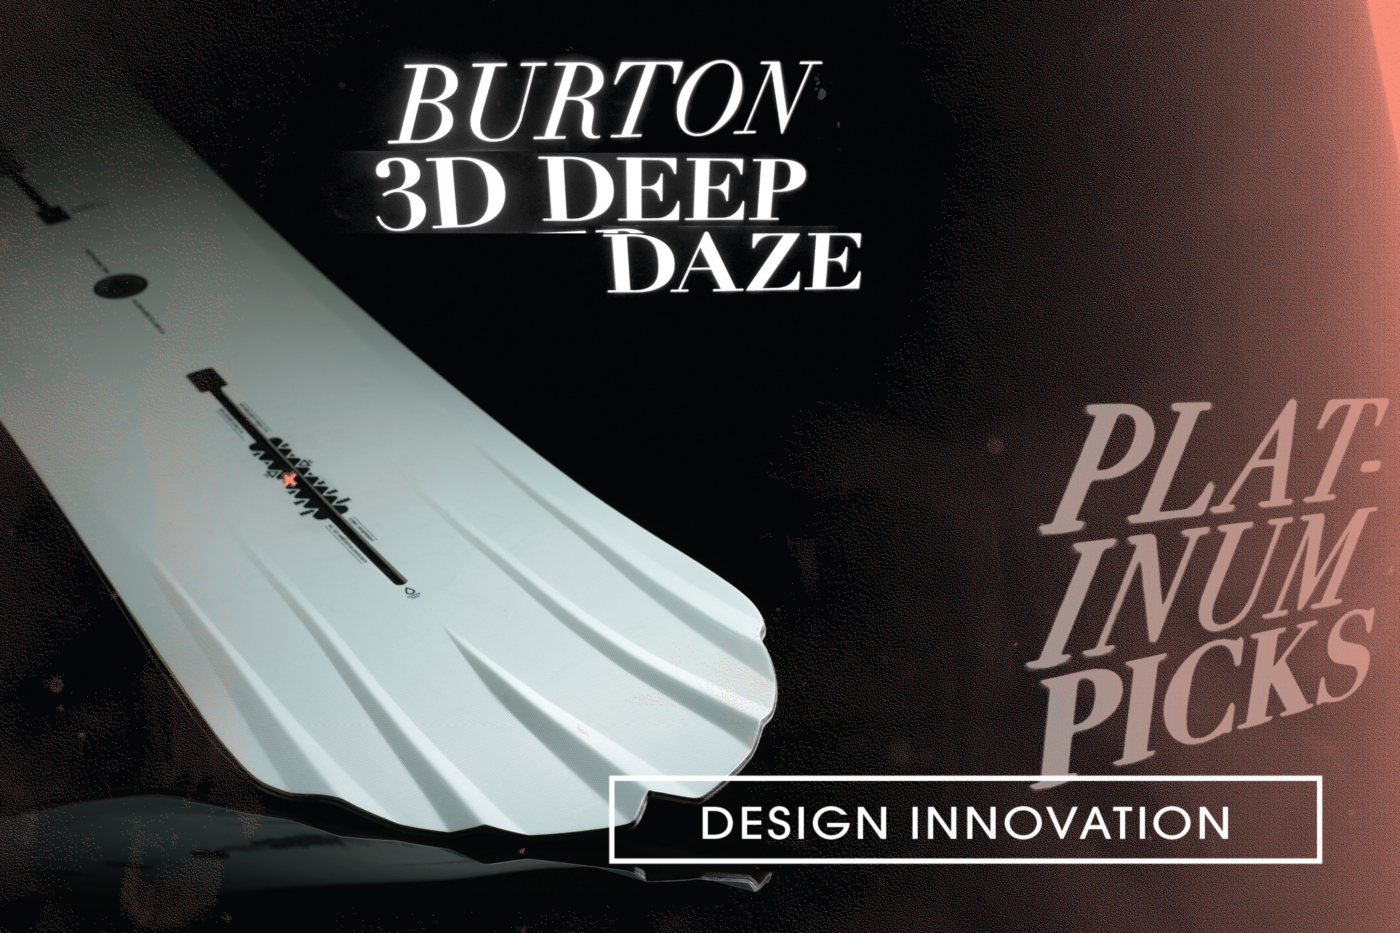 Burton 3D Deep Daze Powder Snowboard